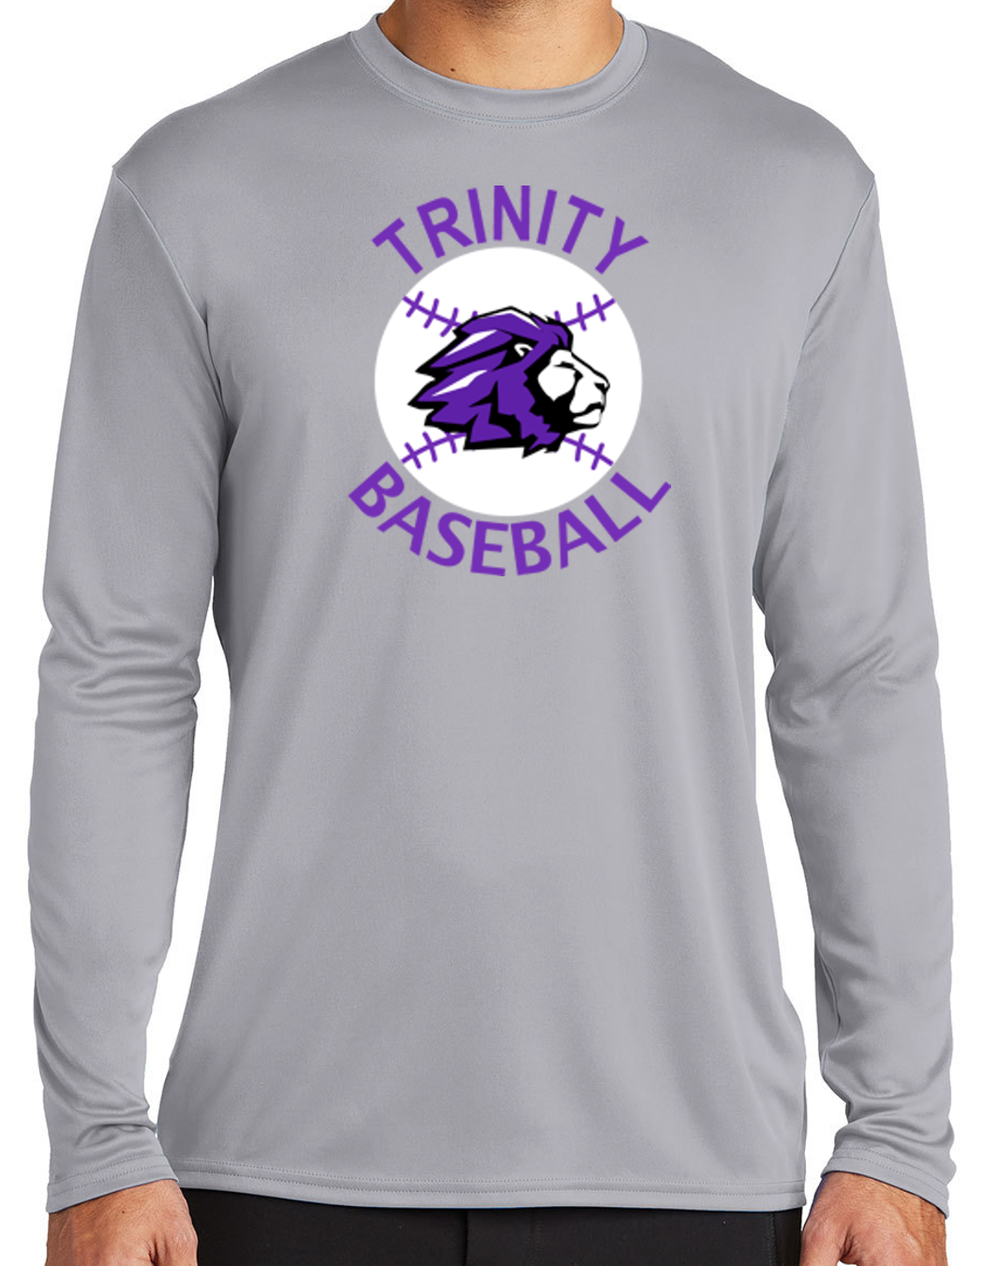 Trinity Baseball Nike Dri Fit T-Shirt/Hoodie Youth & Adult Apparel —  Trinity Christian School